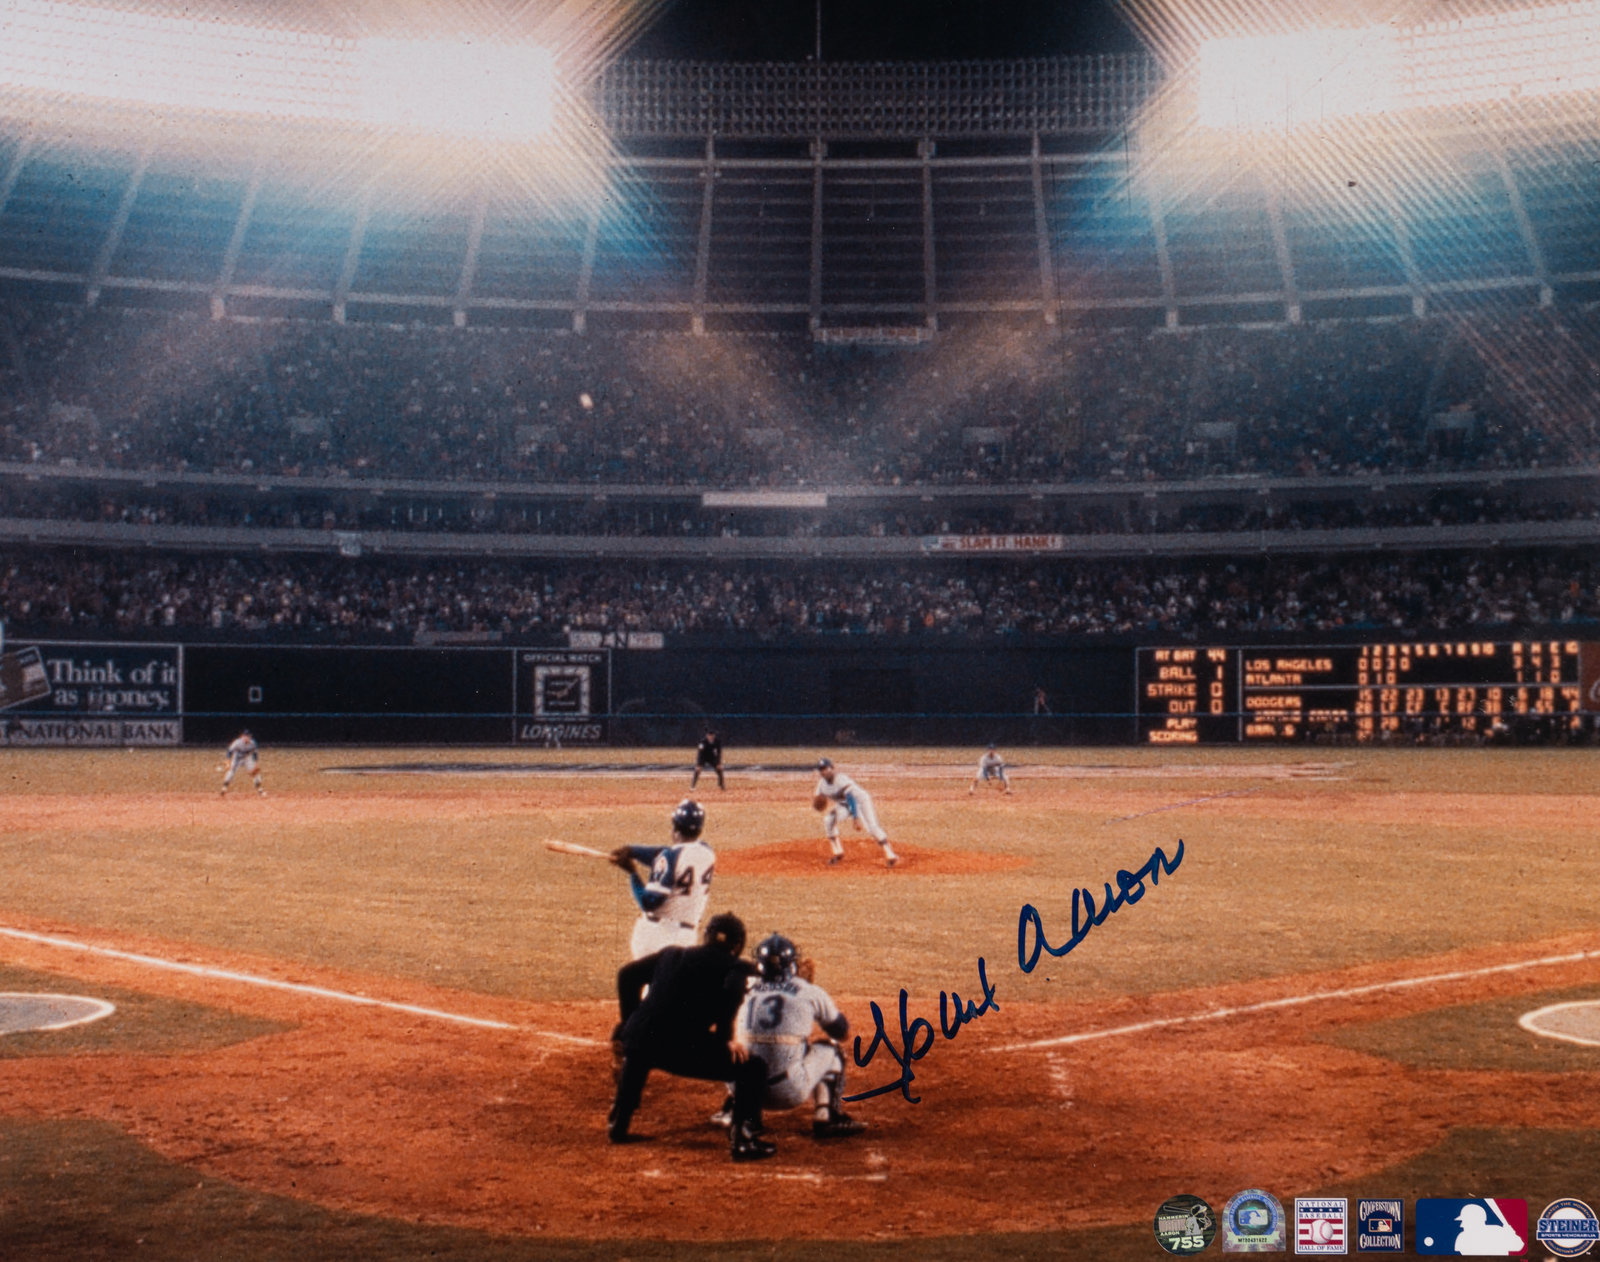 Hank Aaron 755 Signed Oversized Photograph. Baseball